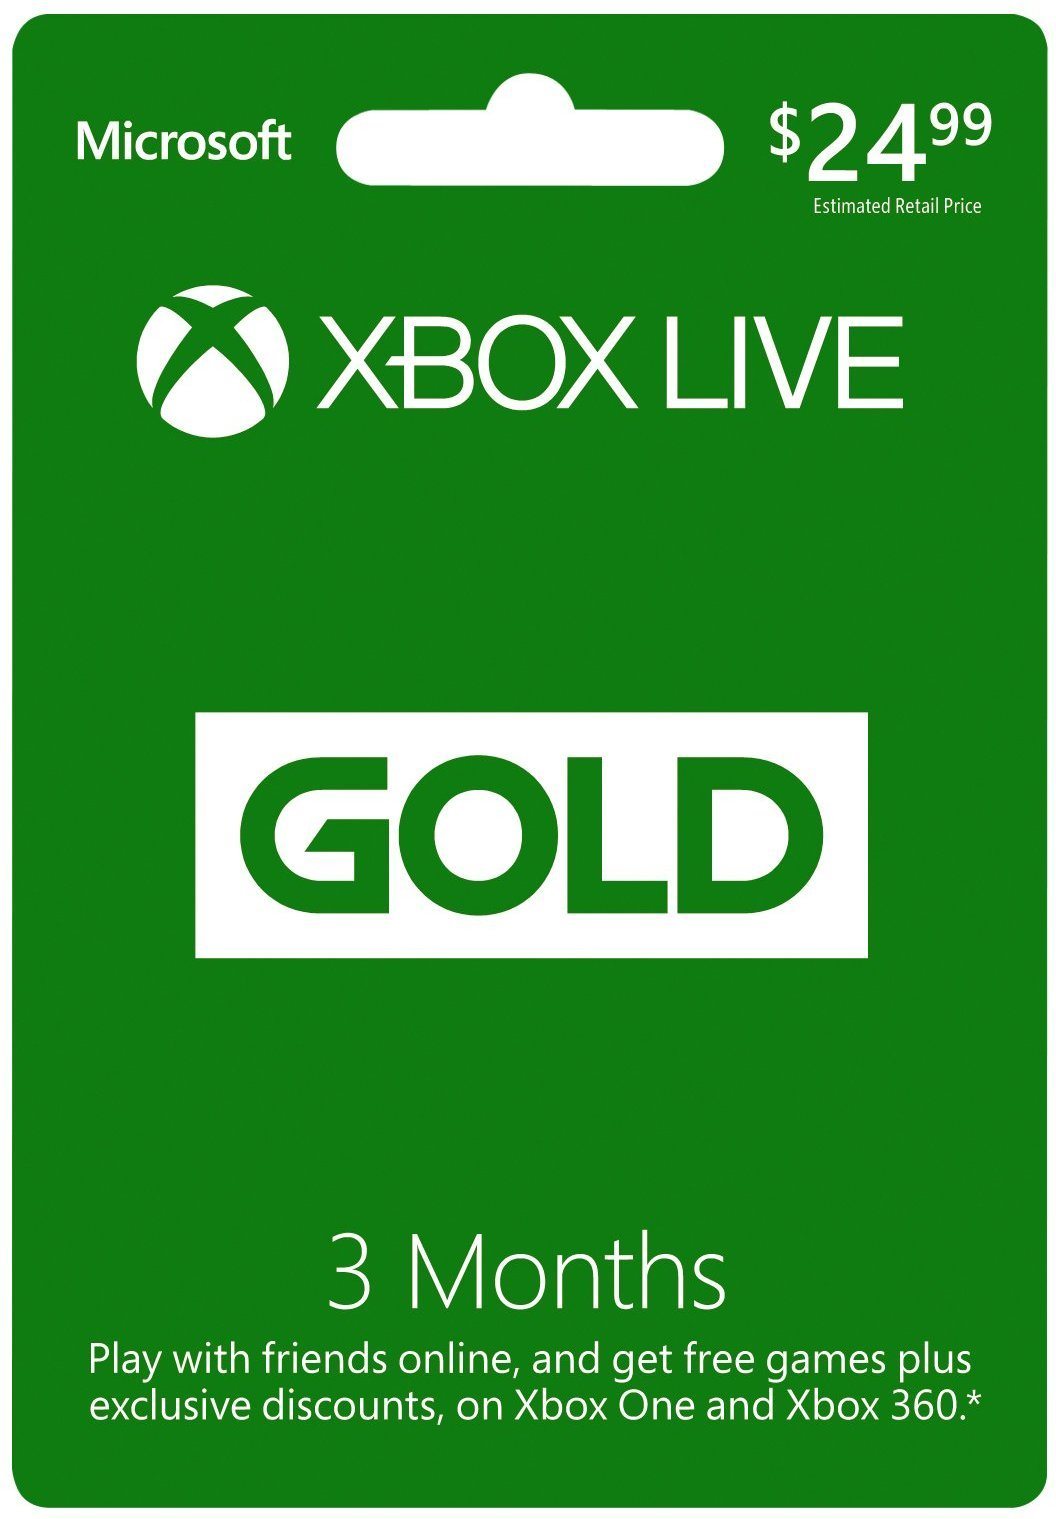 Microsoft Xbox LIVE 3 Month Gold Membership Gift Card - Level UpMicrosoftDigital Cards6270351174406